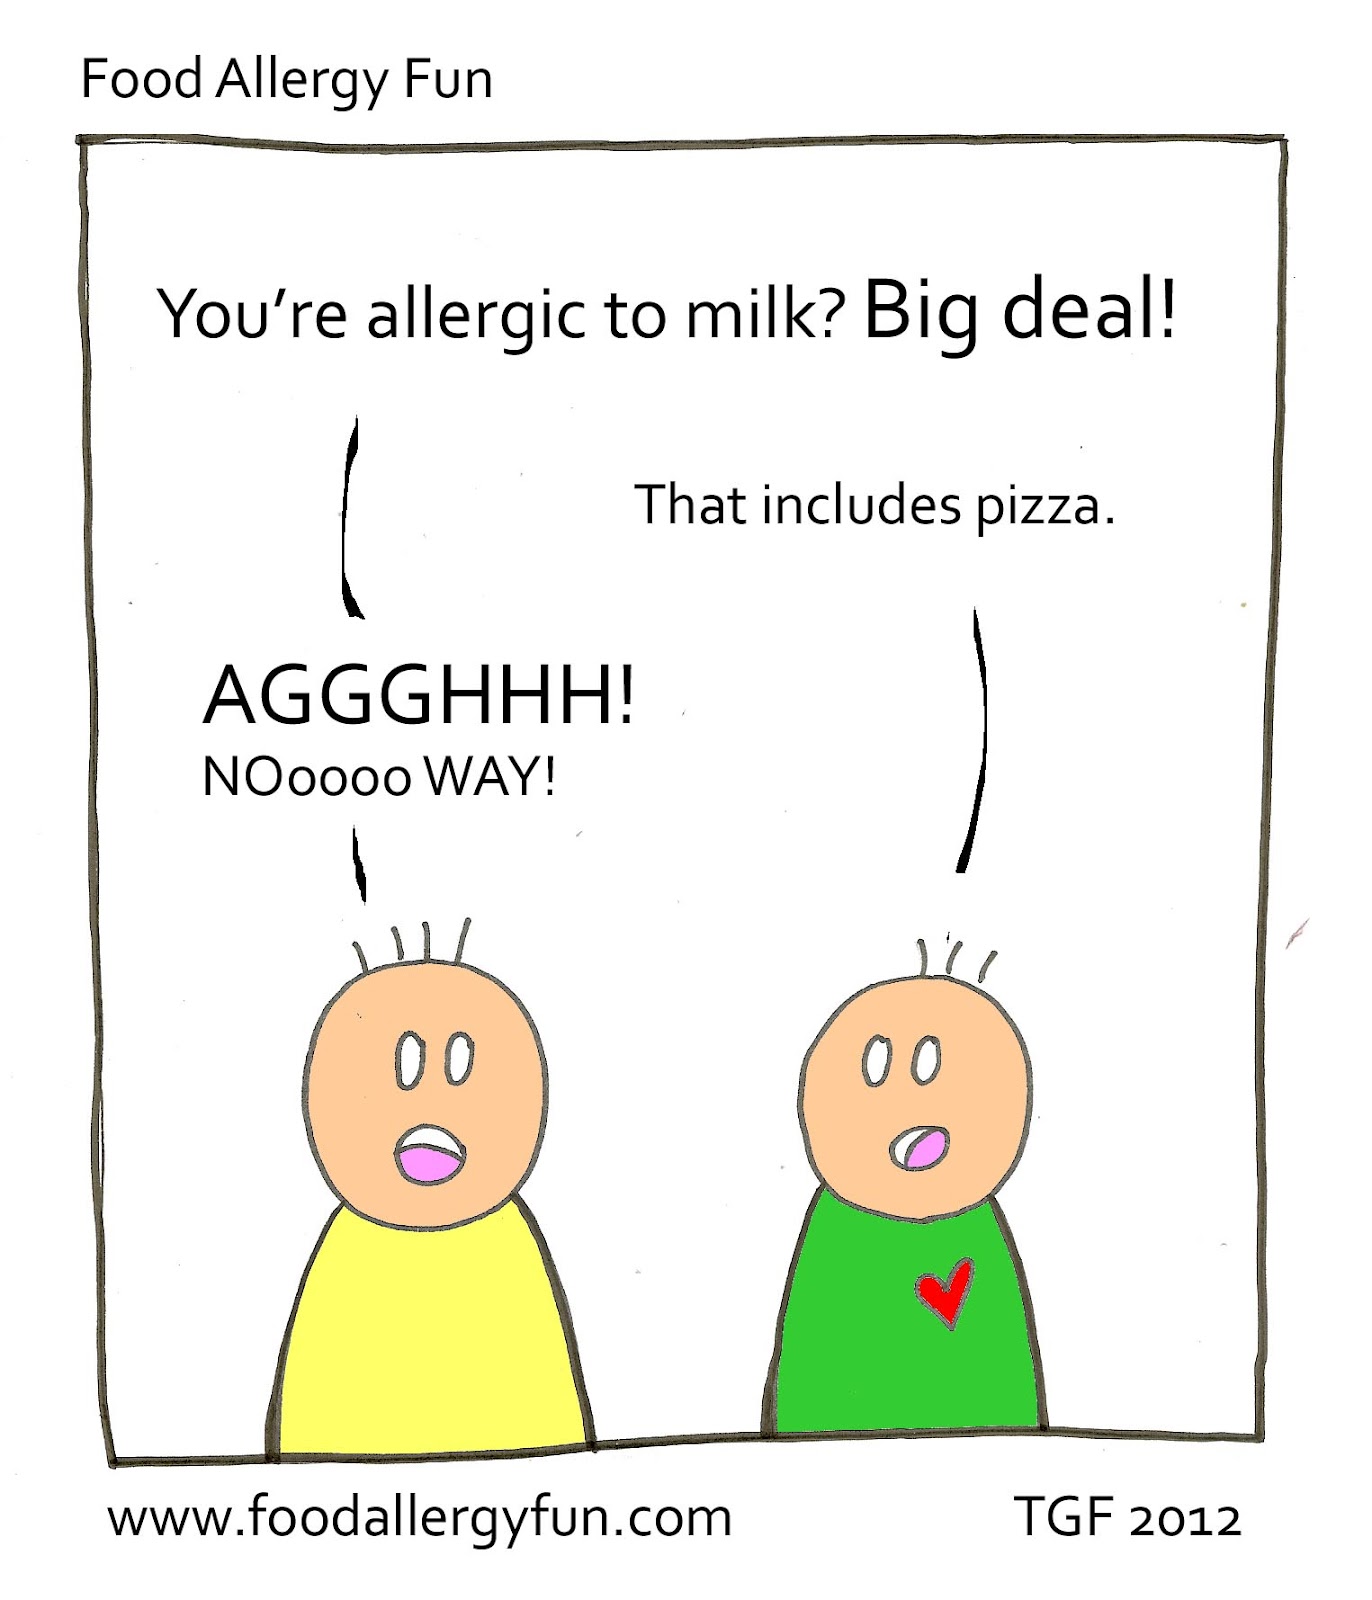 Food Allergy Fun: Big deal - Food Allergy Cartoon